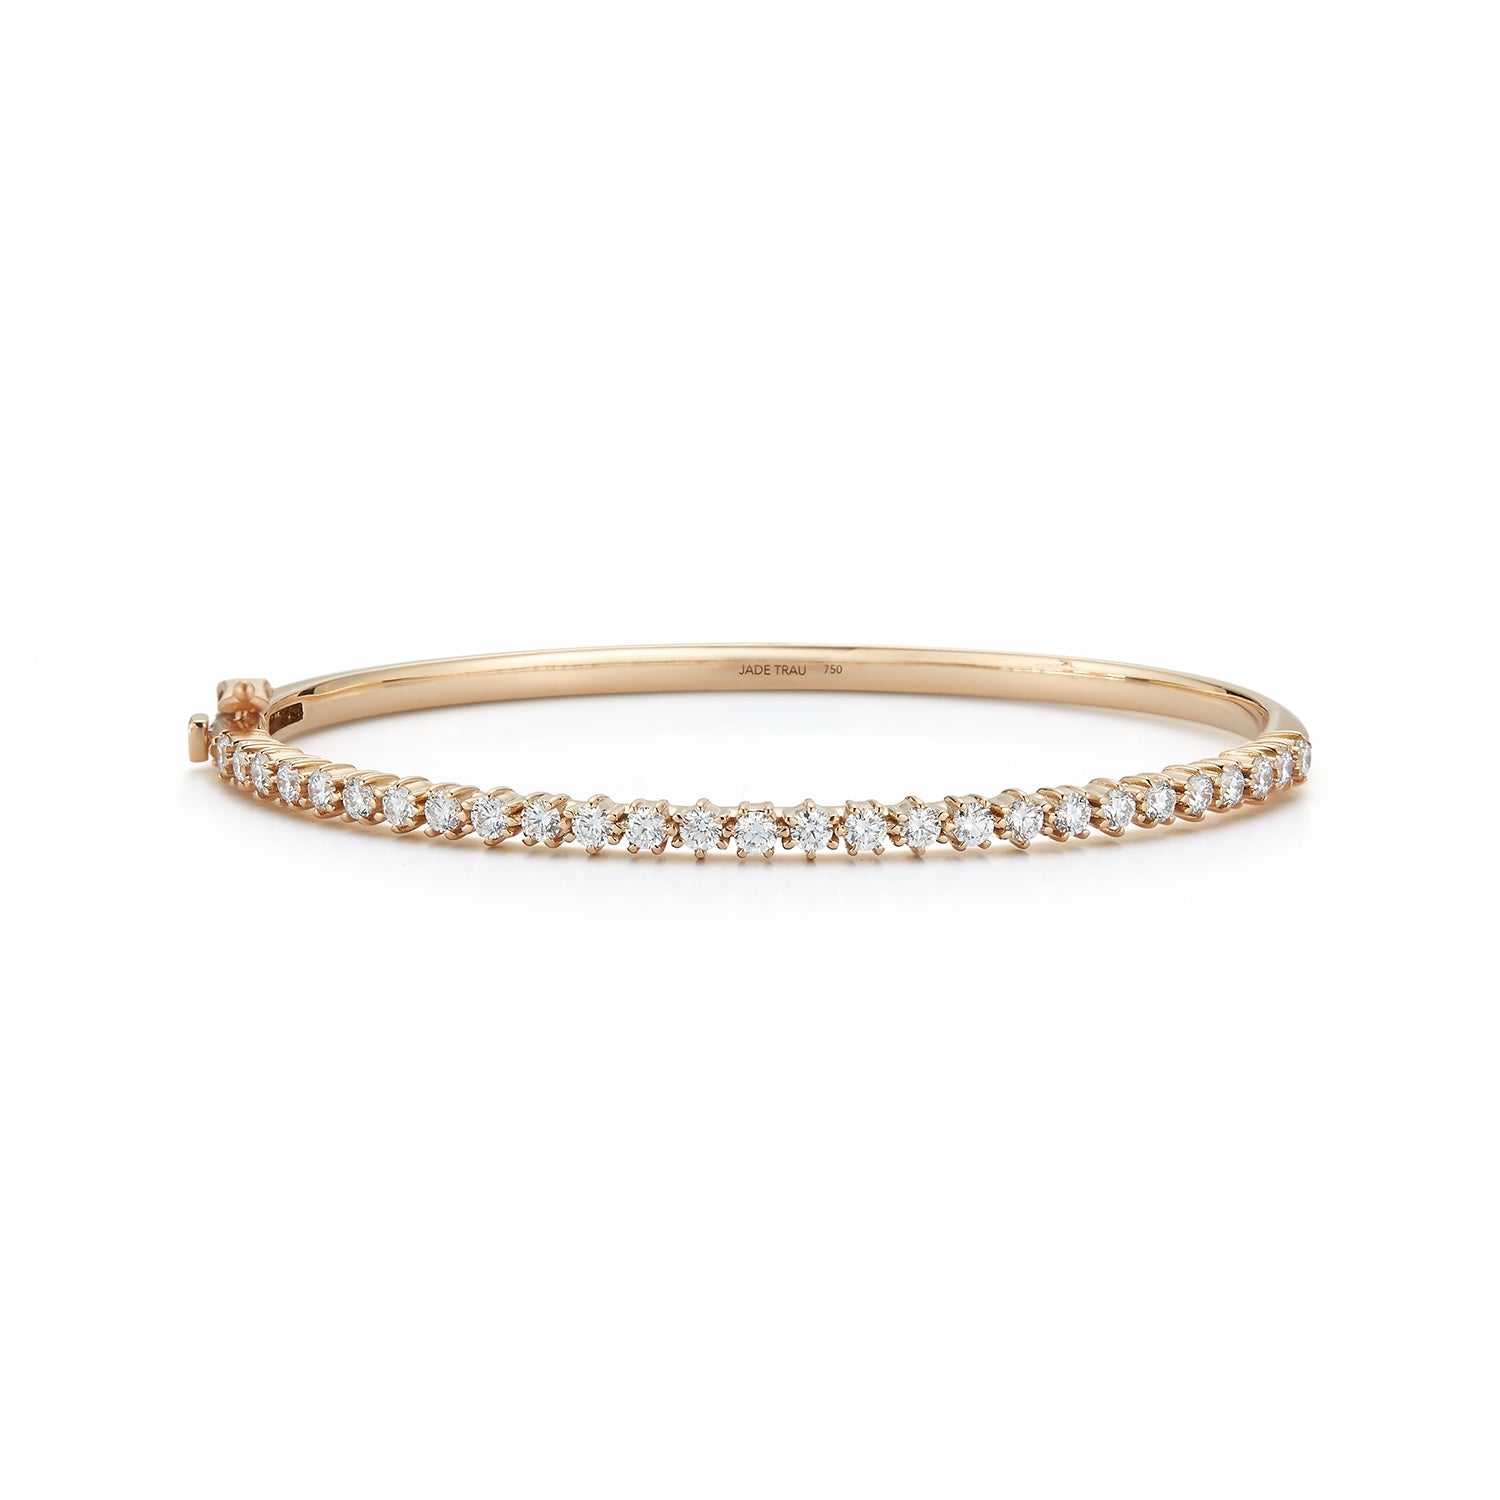 Catherine Diamond Cuff Bracelet in 18K Rose Gold